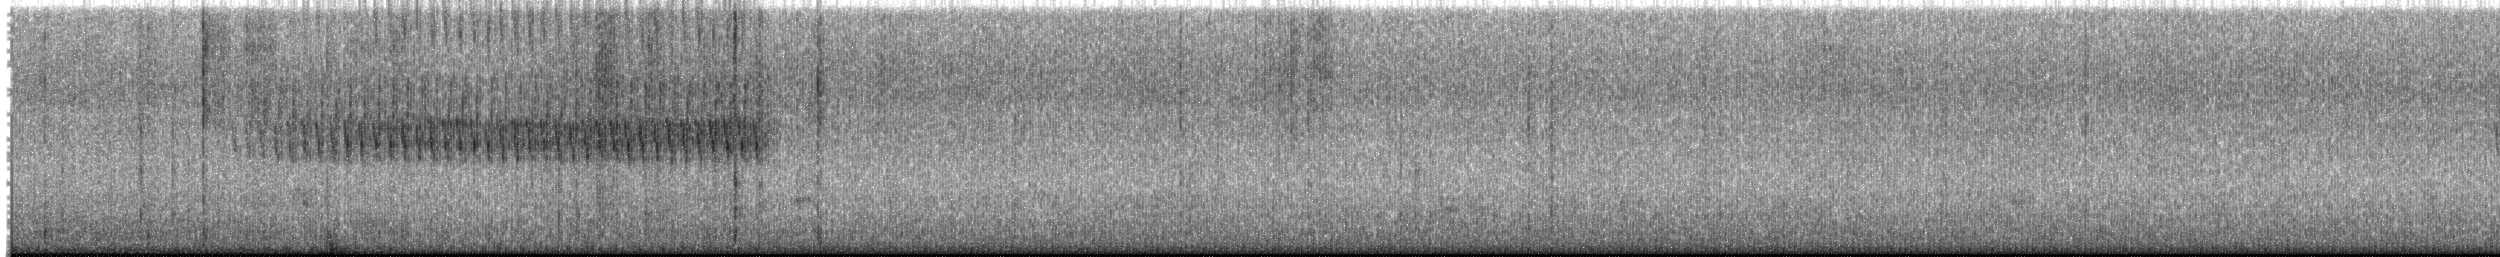 Paruline vermivore - ML621242853